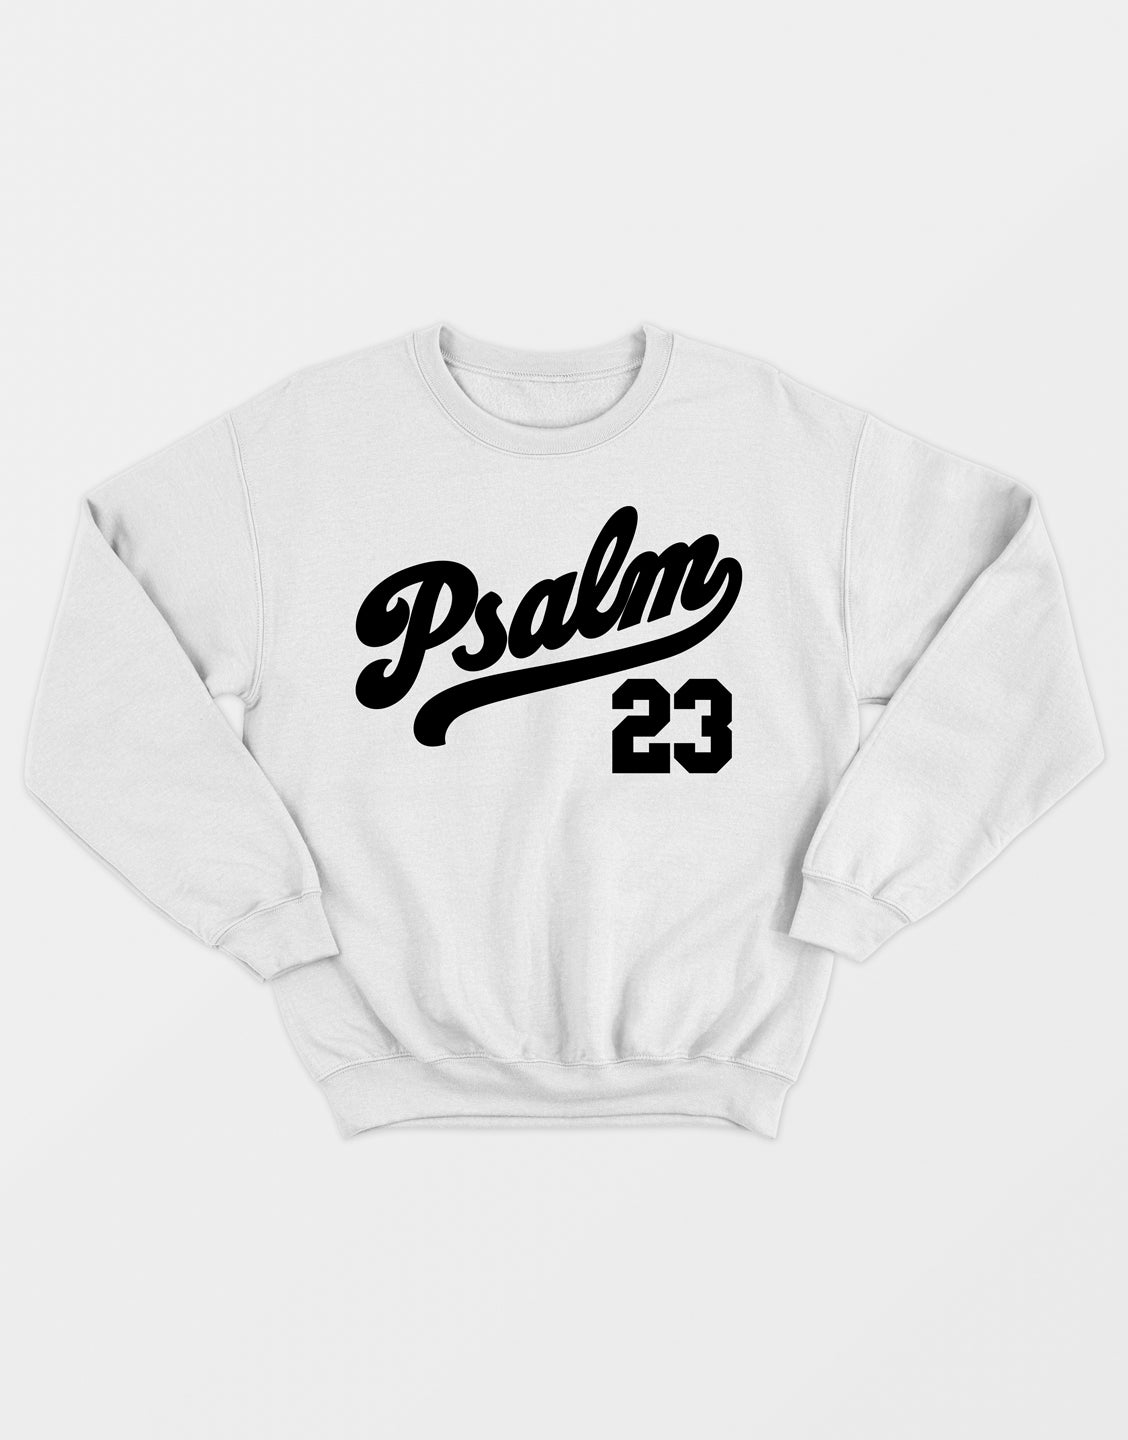 Psalm 23 Sweatshirt - Black Trio